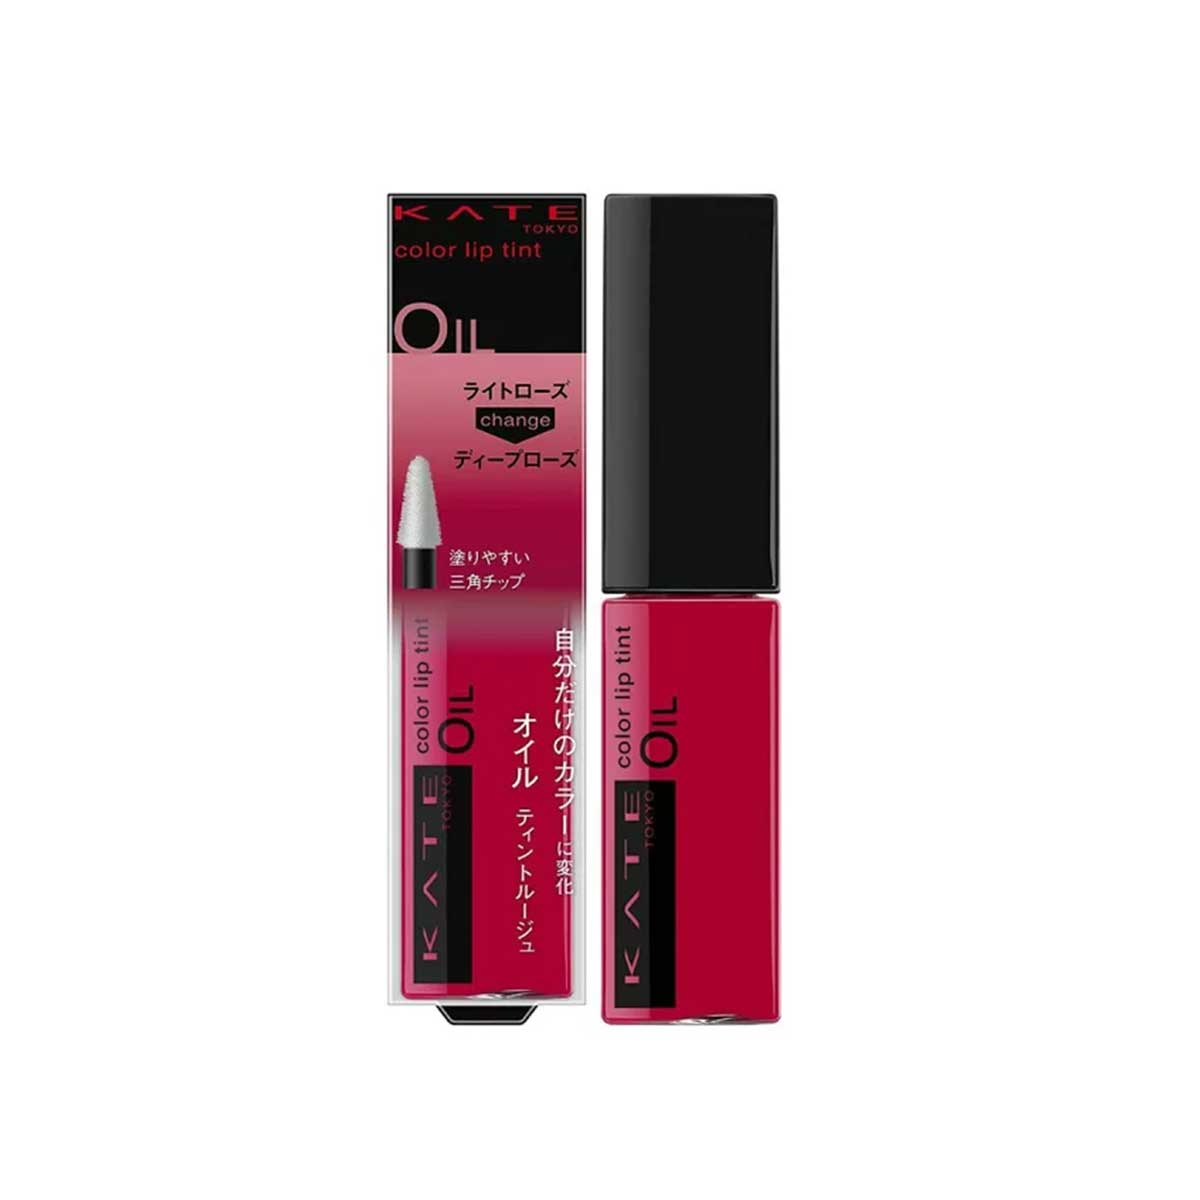 Color Lip Tint Oil Lip Gloss #RS-1  6.5g